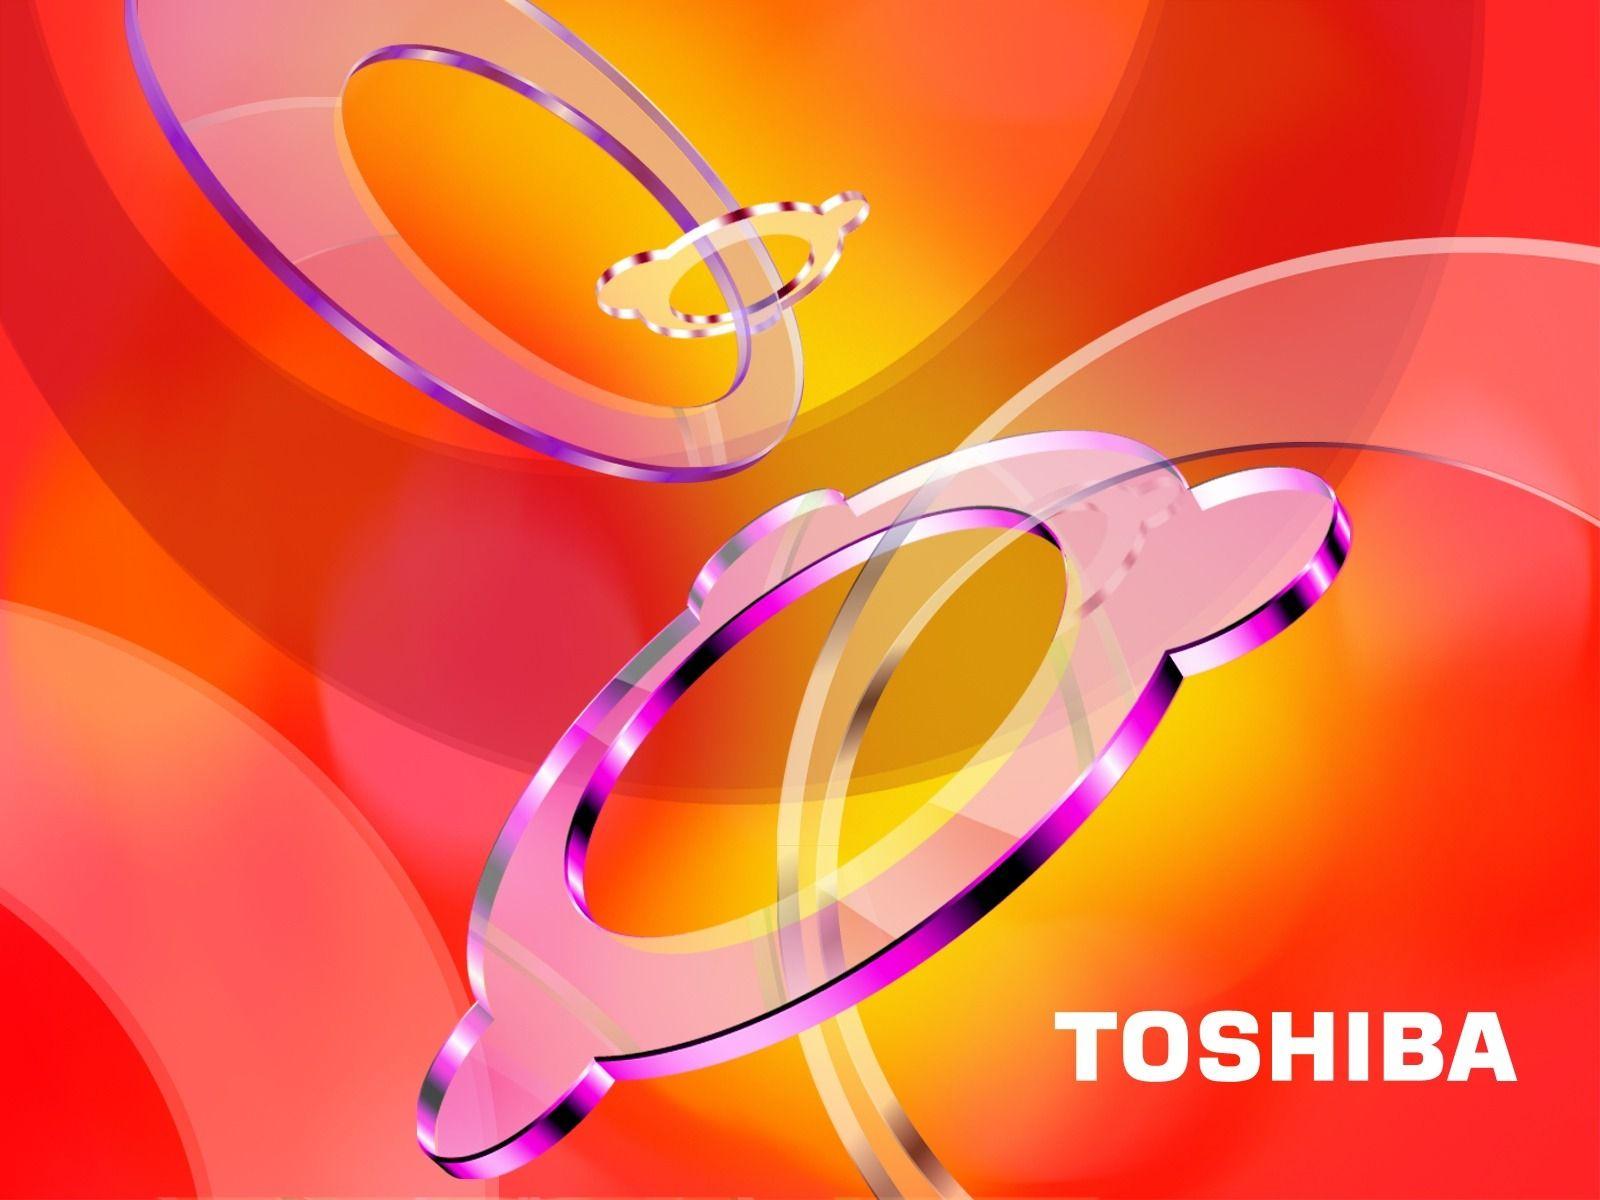 Toshiba Wallpaper by jakub0602 on DeviantArt